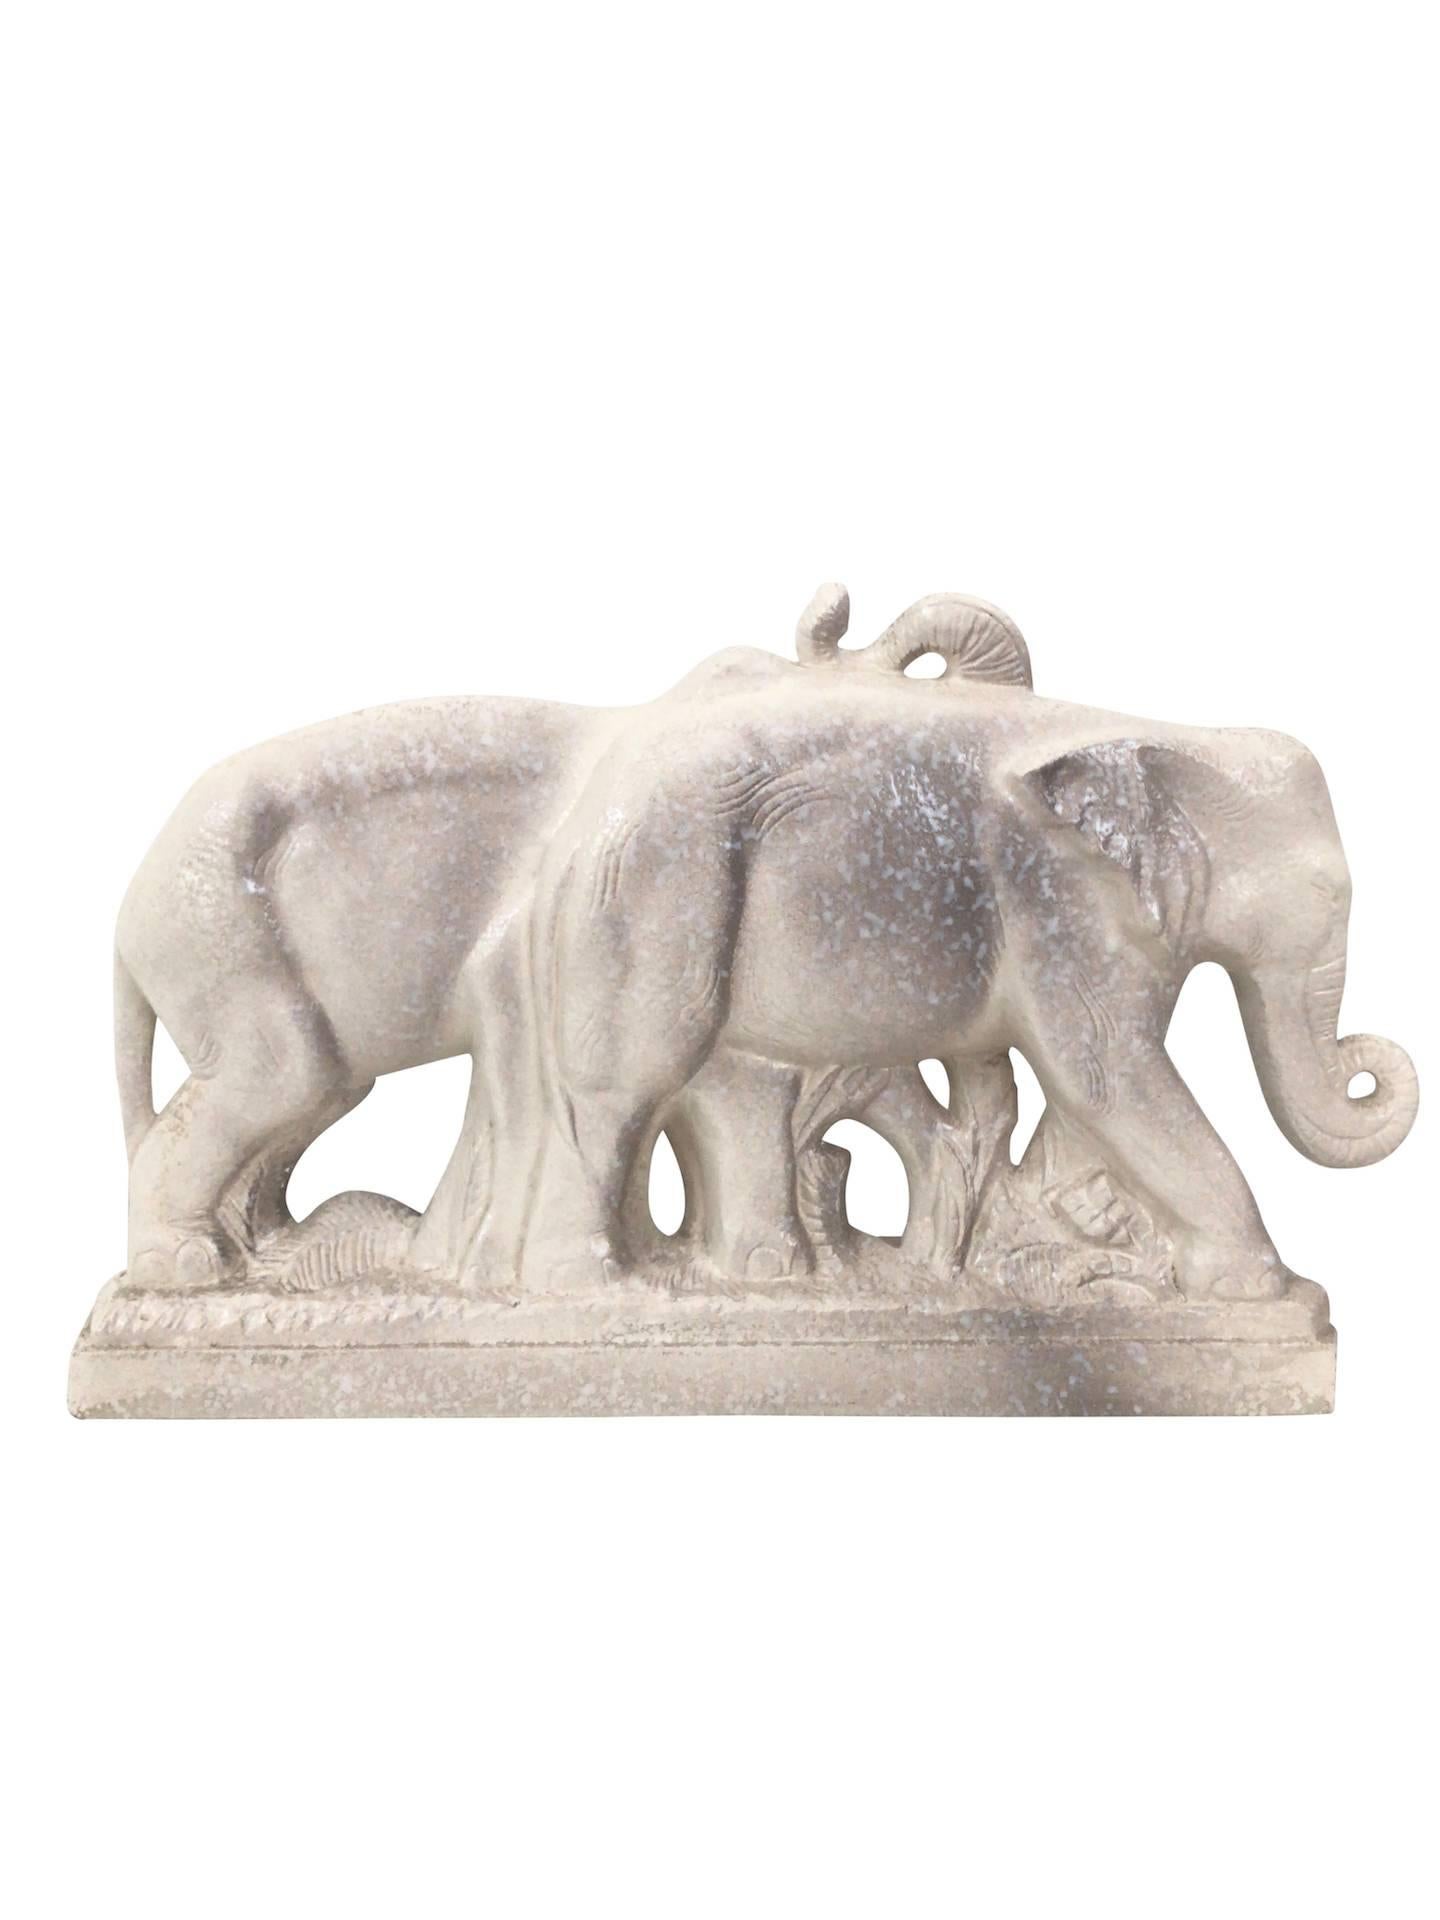 Fired Louis Fontinelle, Cream Glazed Ceramic Elephants, France, 1930s For Sale